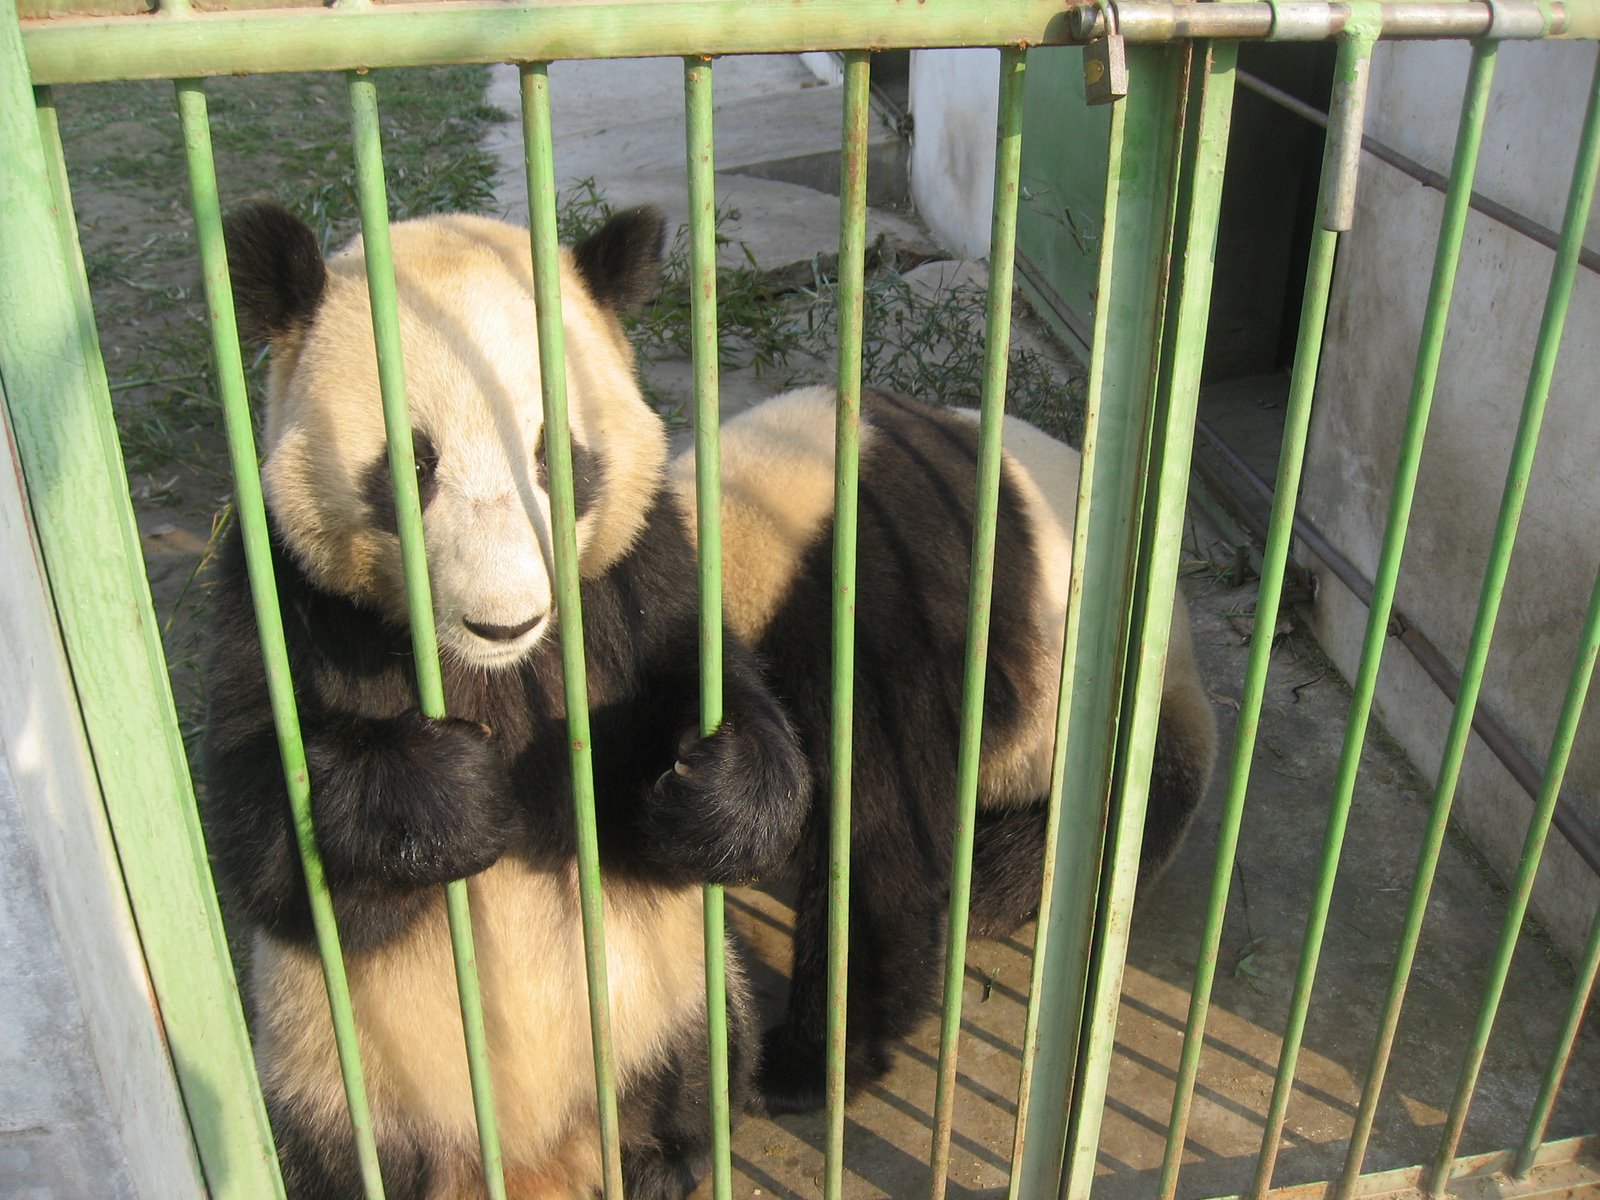 Panda behind bars